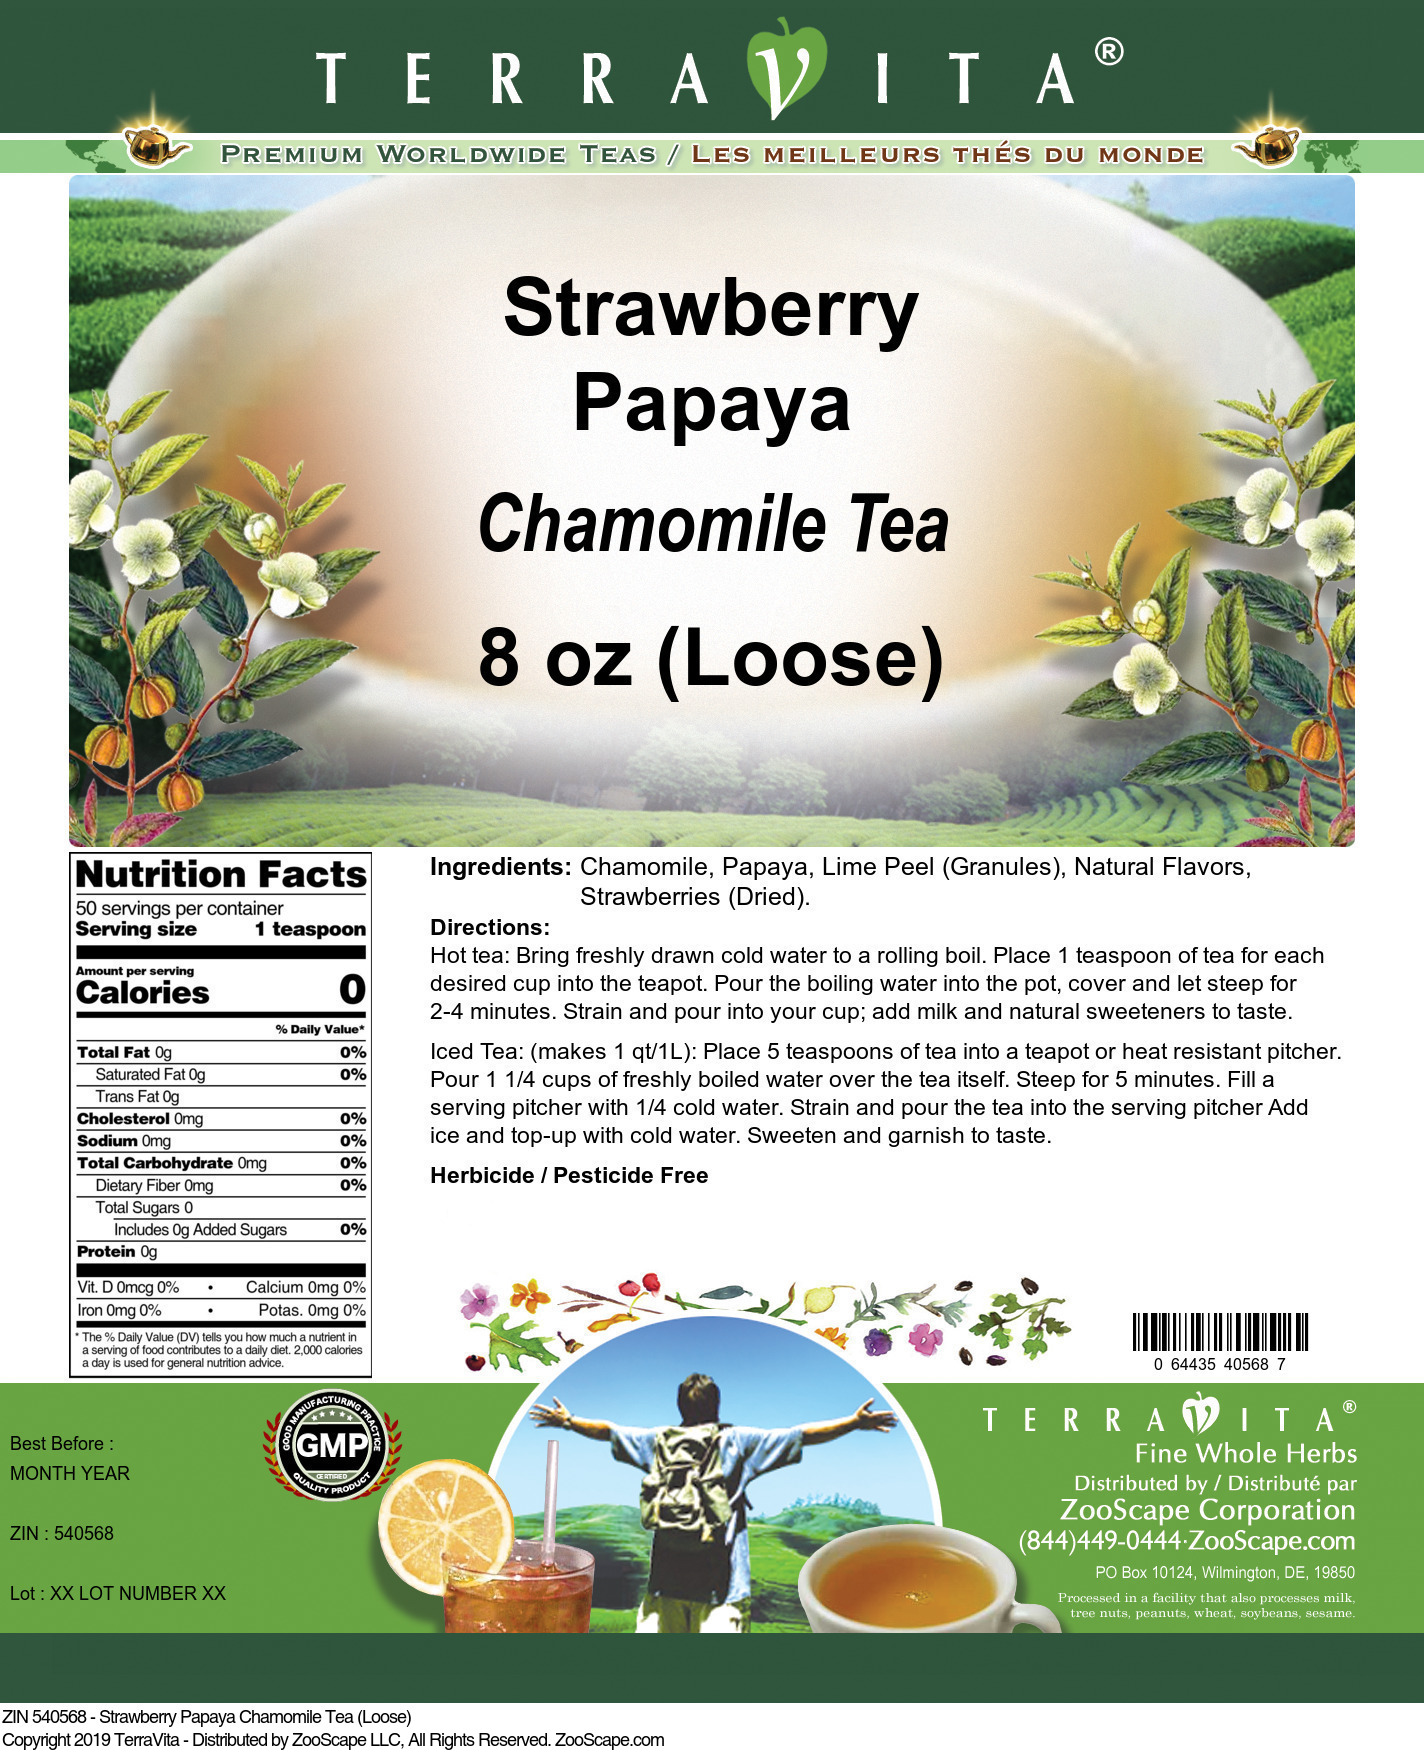 Strawberry Papaya Chamomile Tea (Loose) - Label